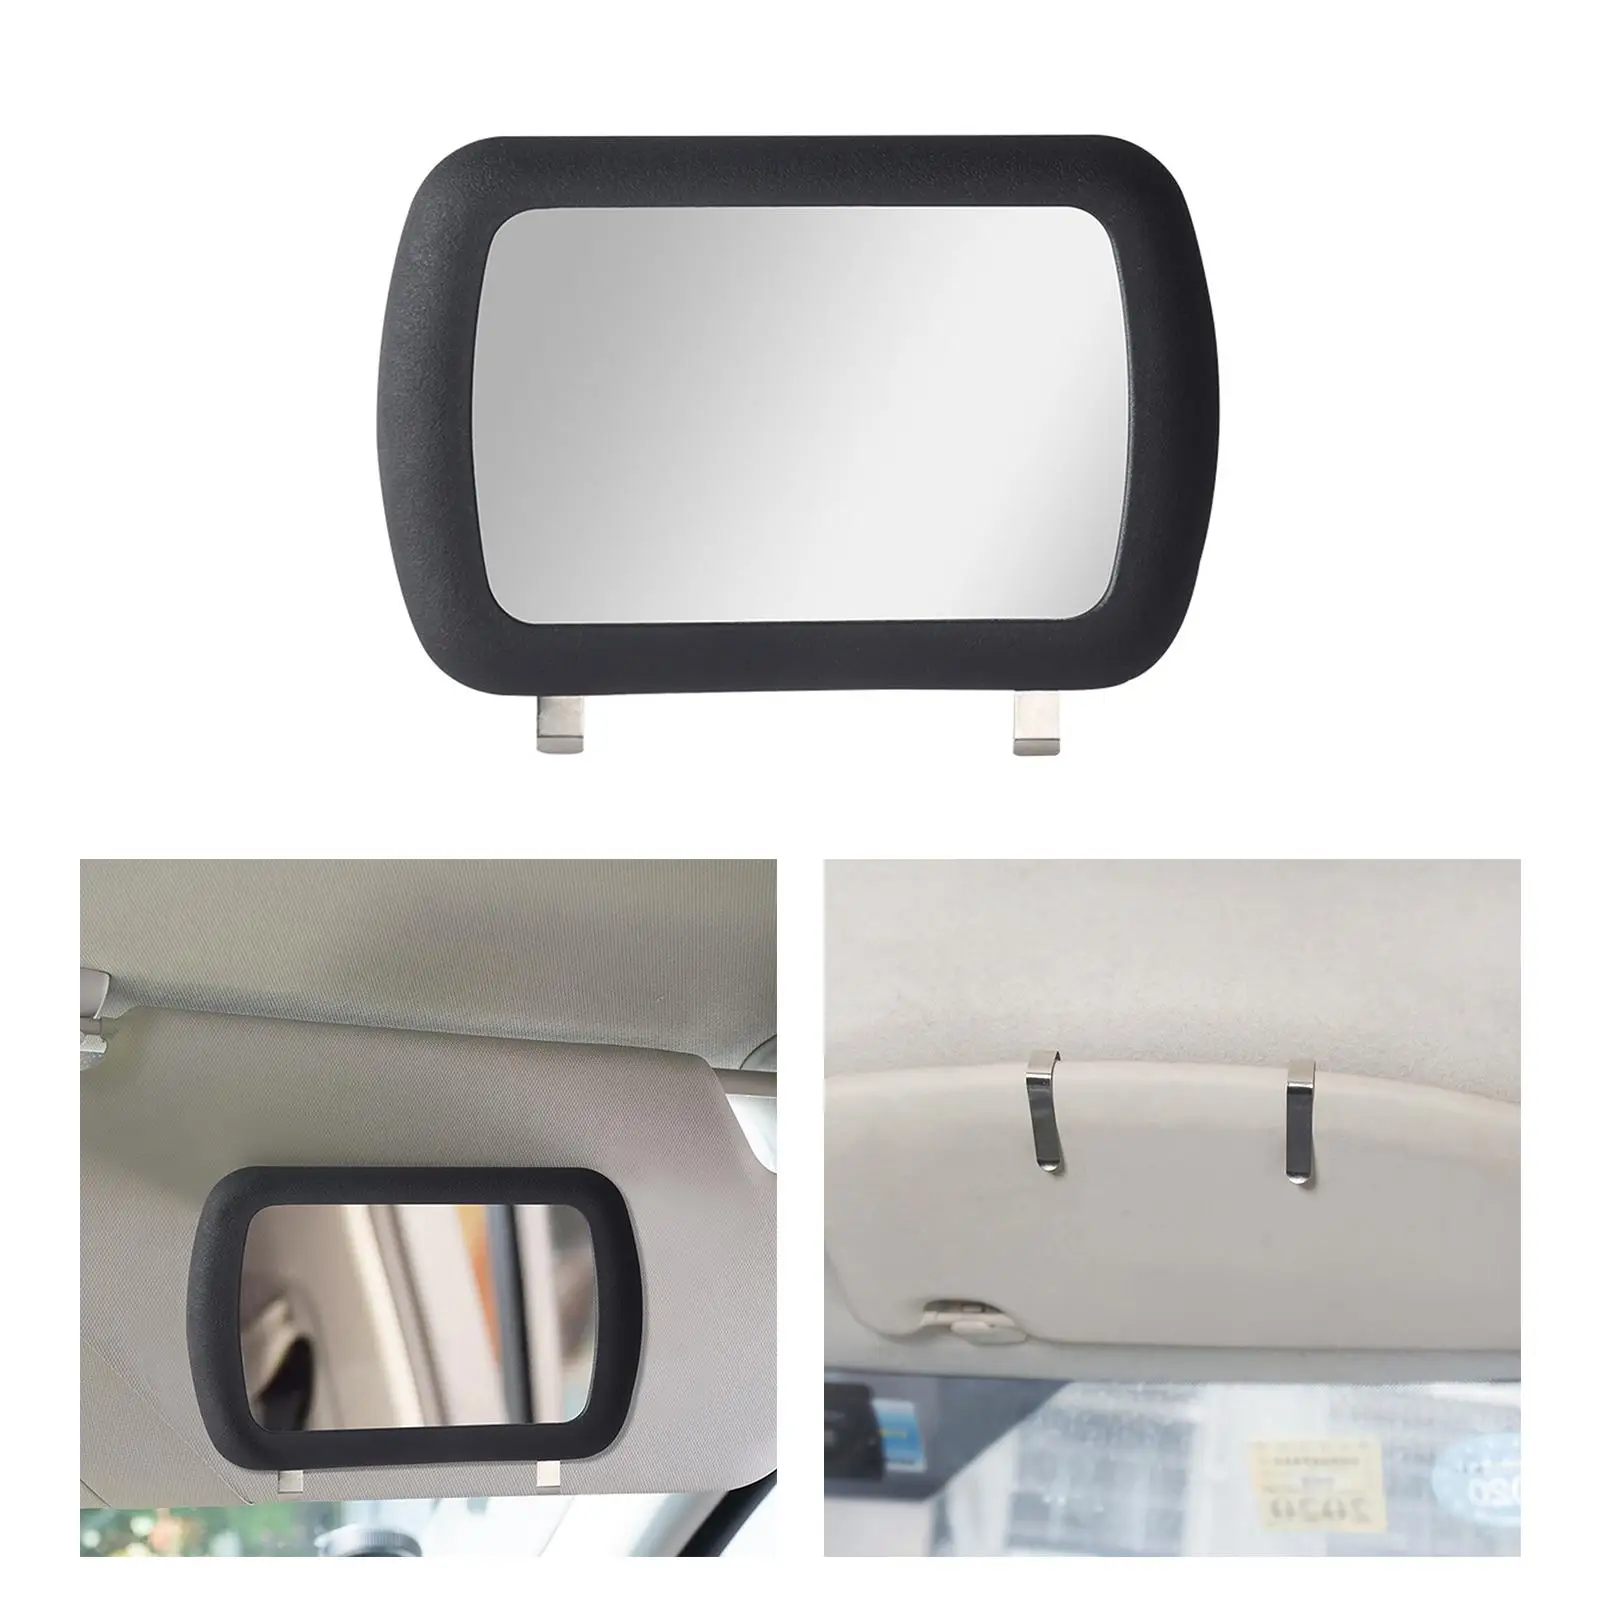 Car Sun Visor Vanity Mirror Front Portable Large for Sun Shading Truck Wife